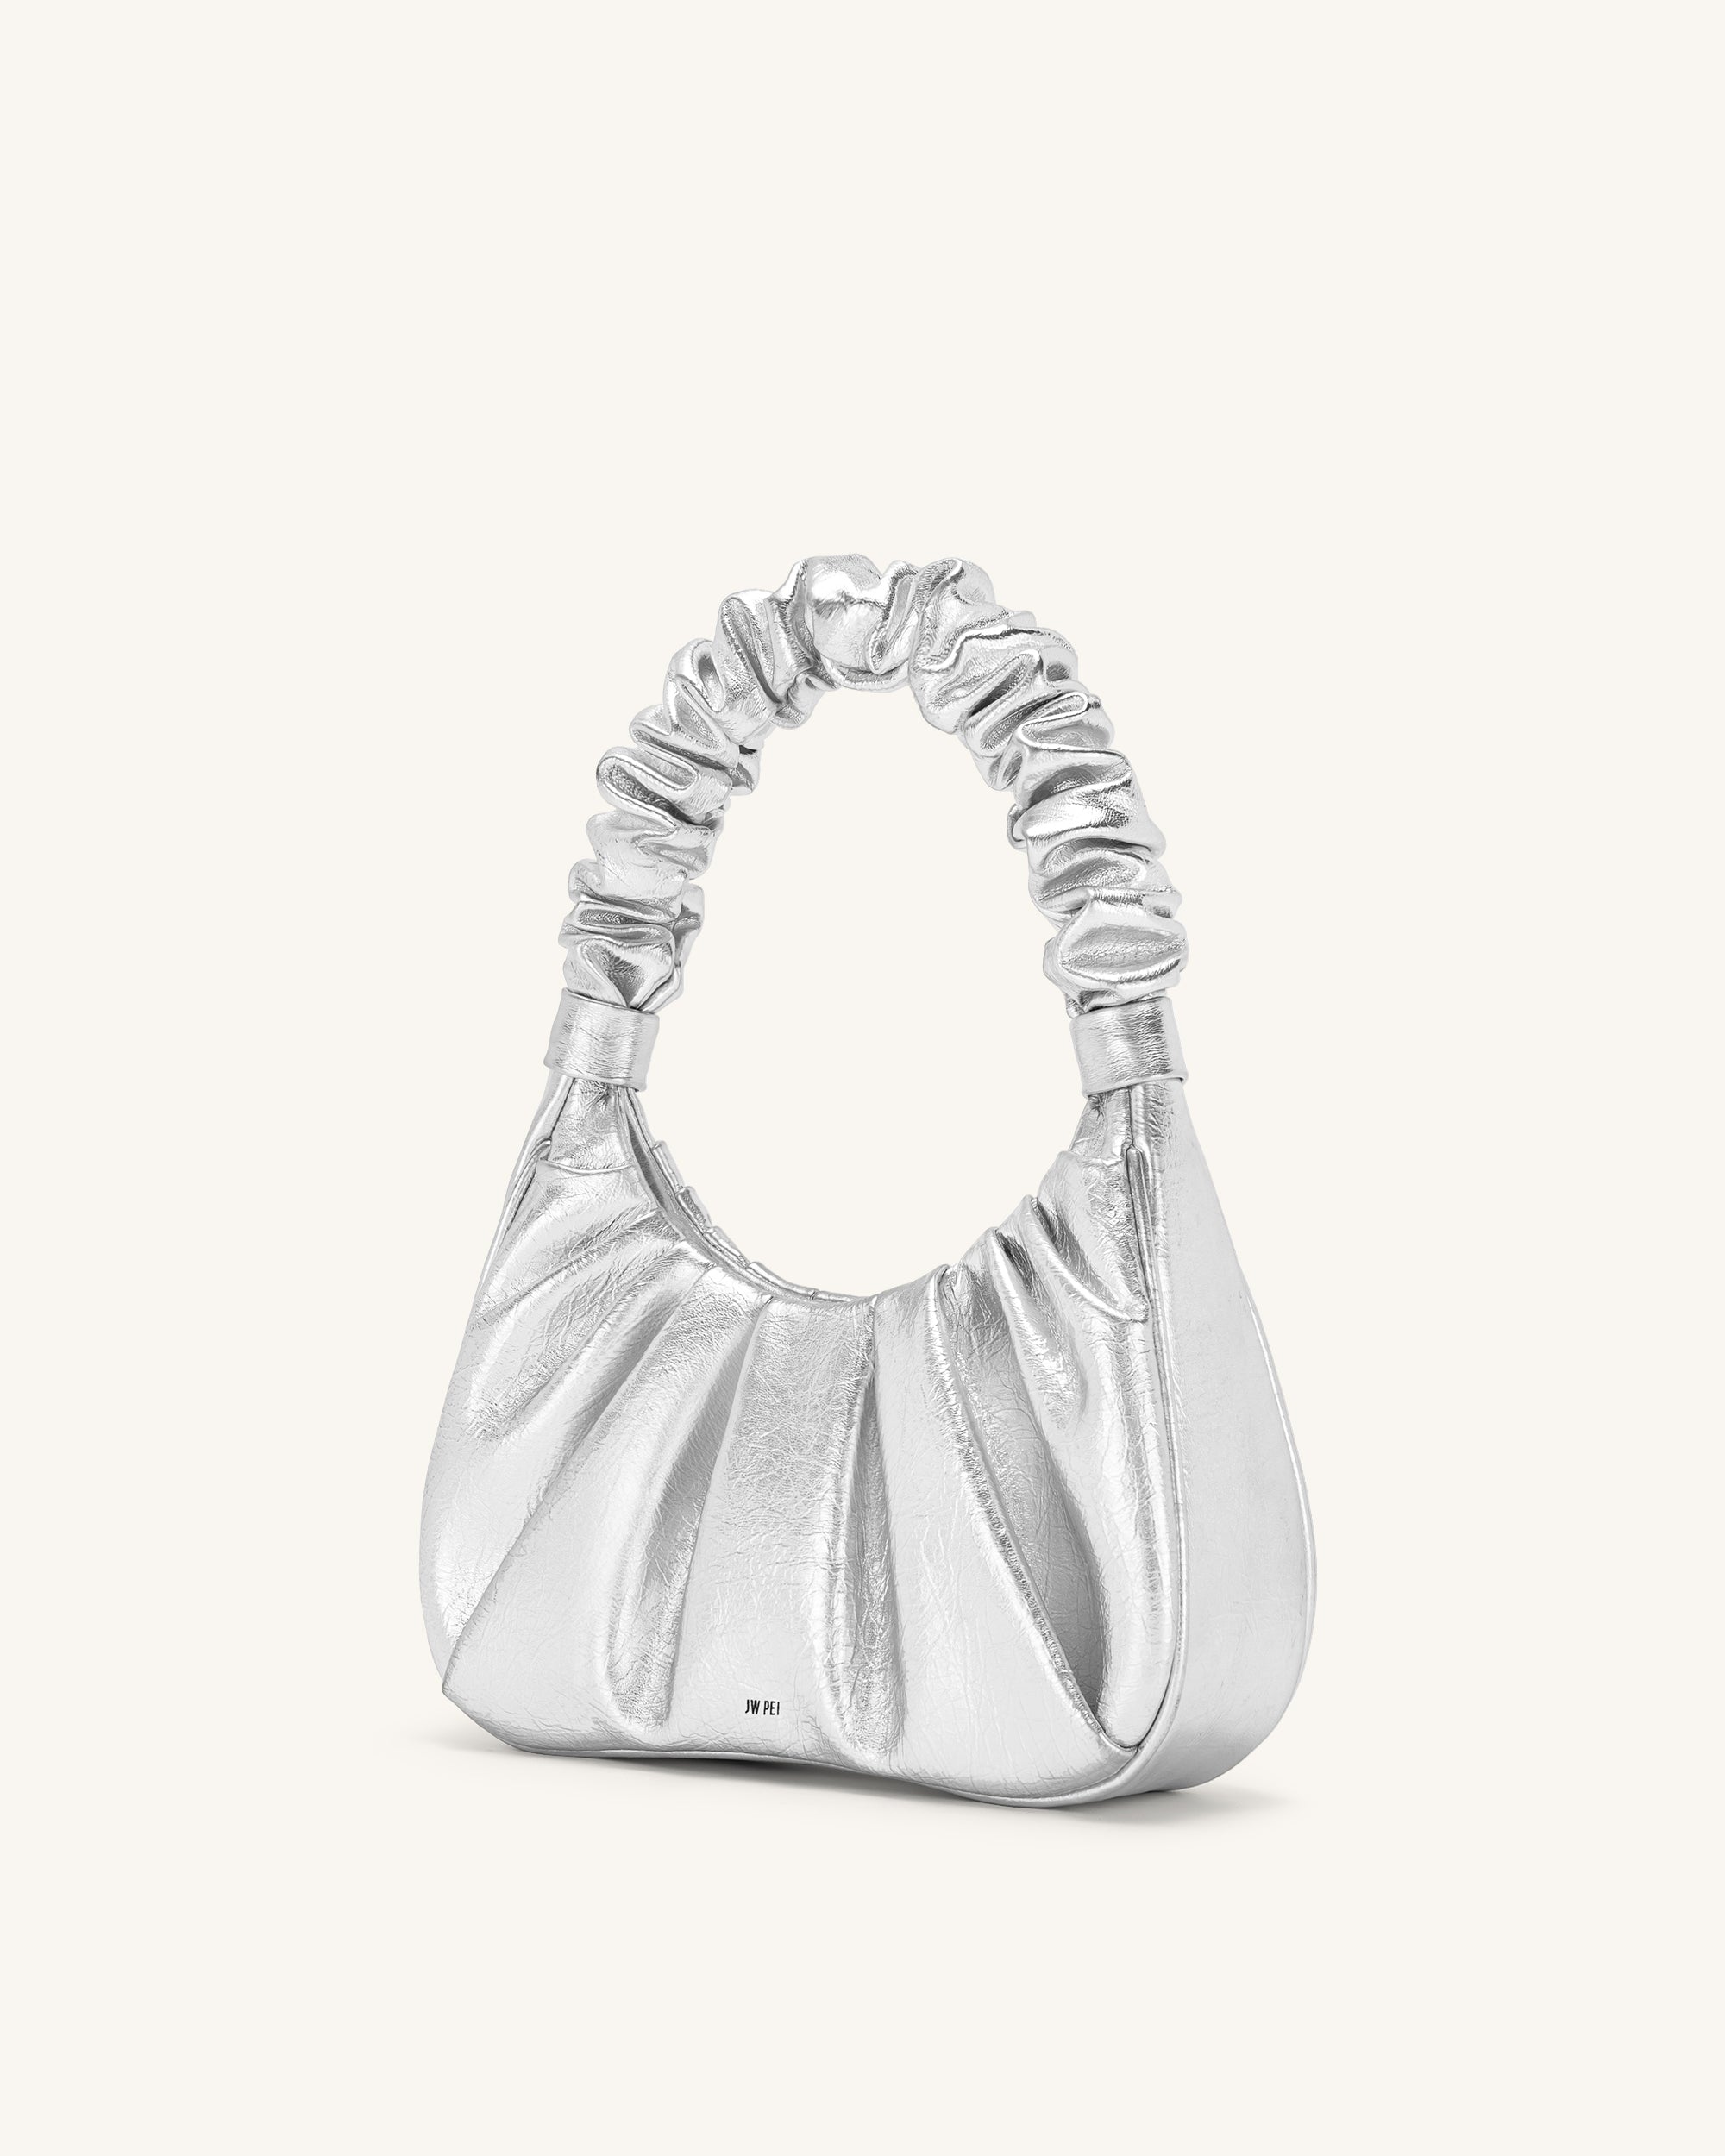 JW Pei- Gabbi Ruched Hobo Handbag- Ivory